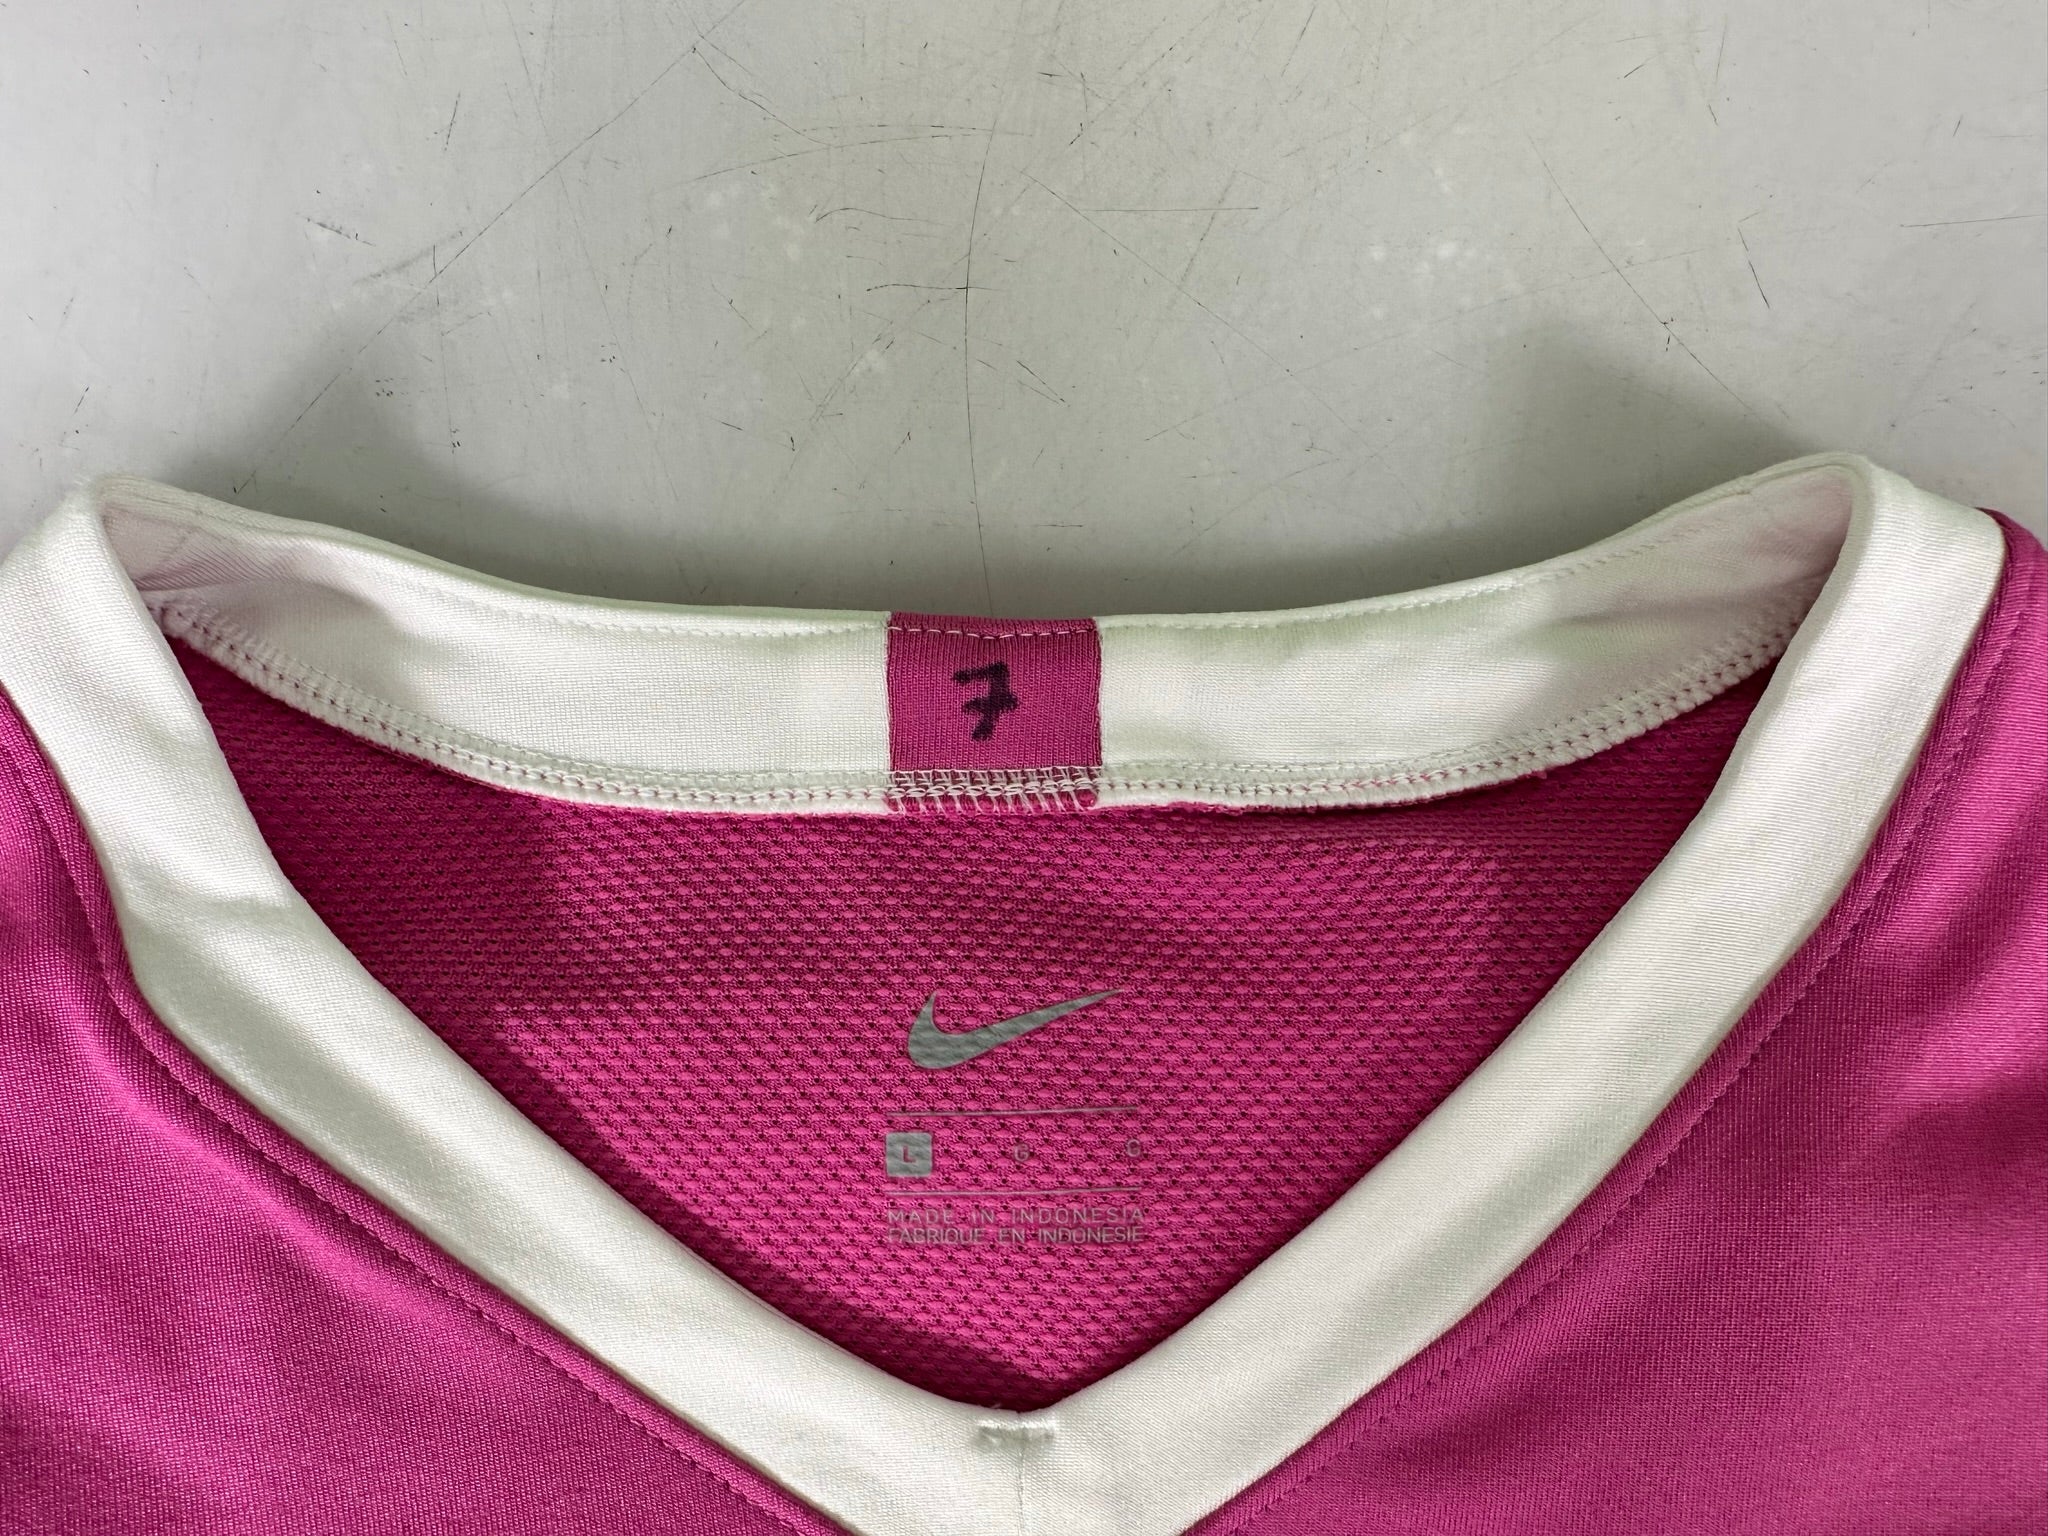 Nike Pink MSU Long Sleeve Volleyball Jersey #7 Women's Size L